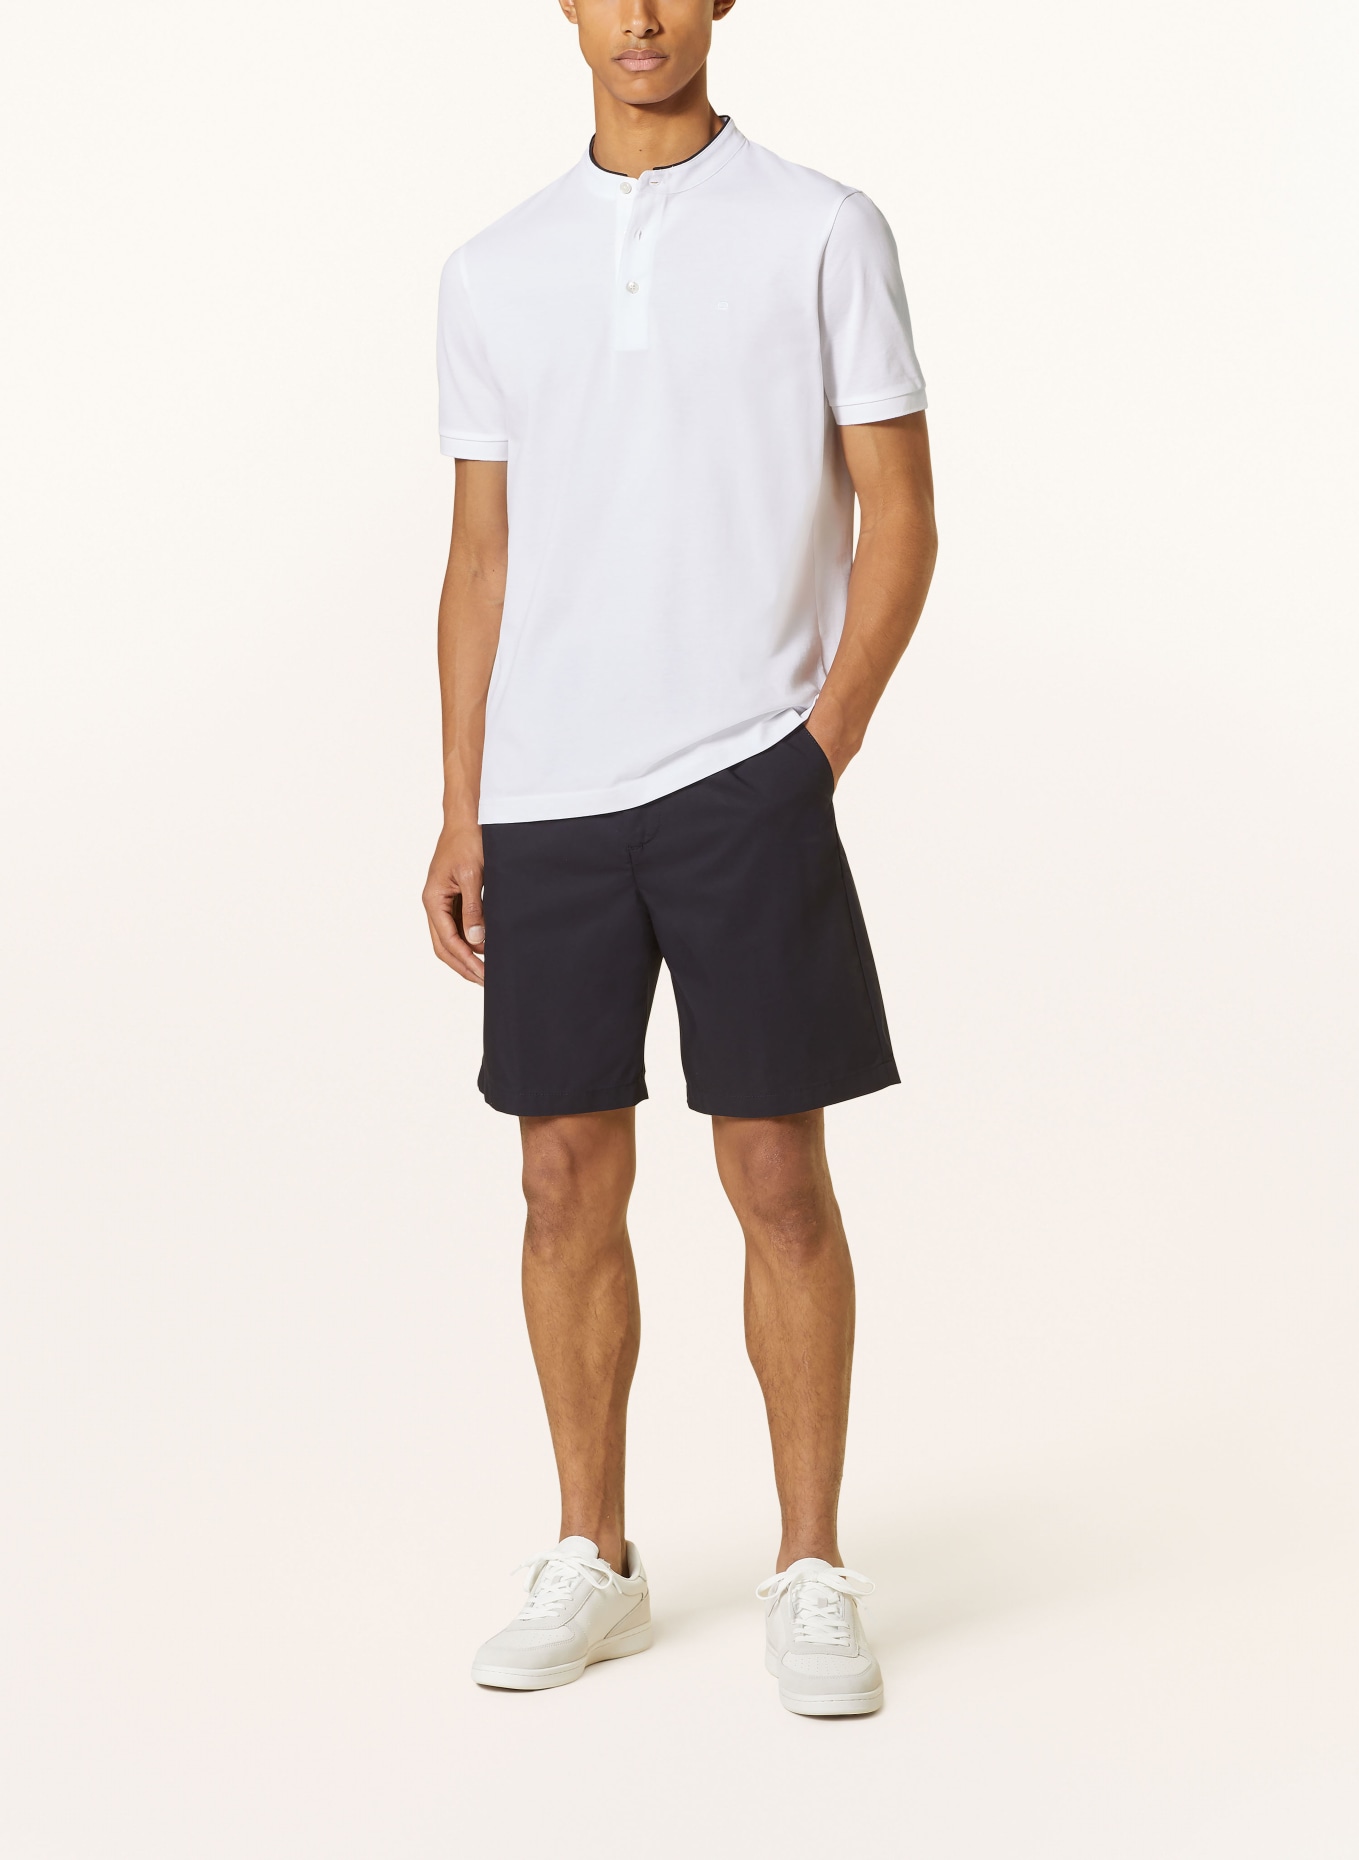 OLYMP Piqué-Poloshirt, Farbe: WEISS (Bild 2)